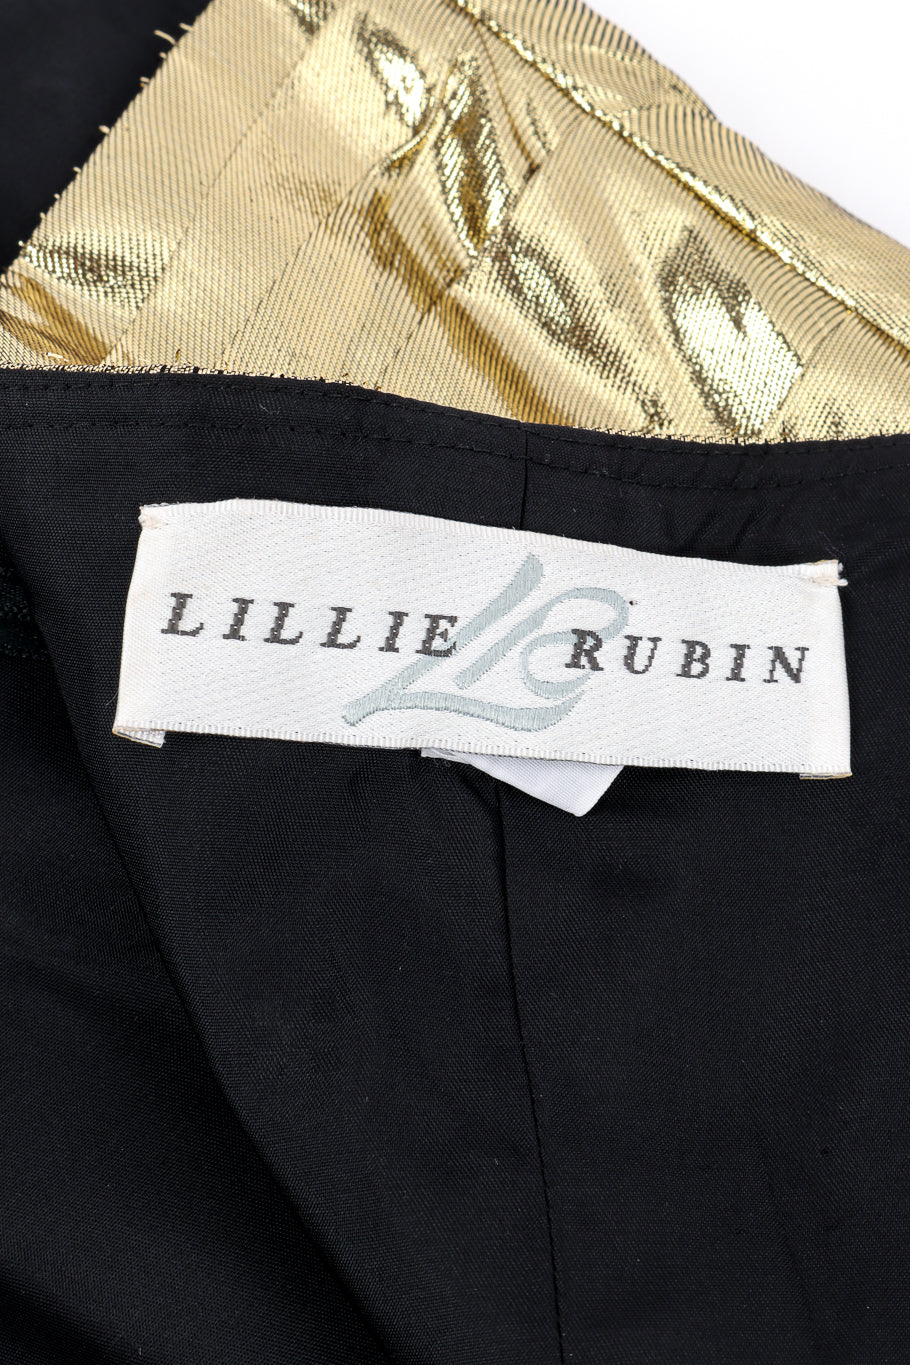 Asymmetrical Strapless Ruche Gown by Lillie Rubin label @recessla